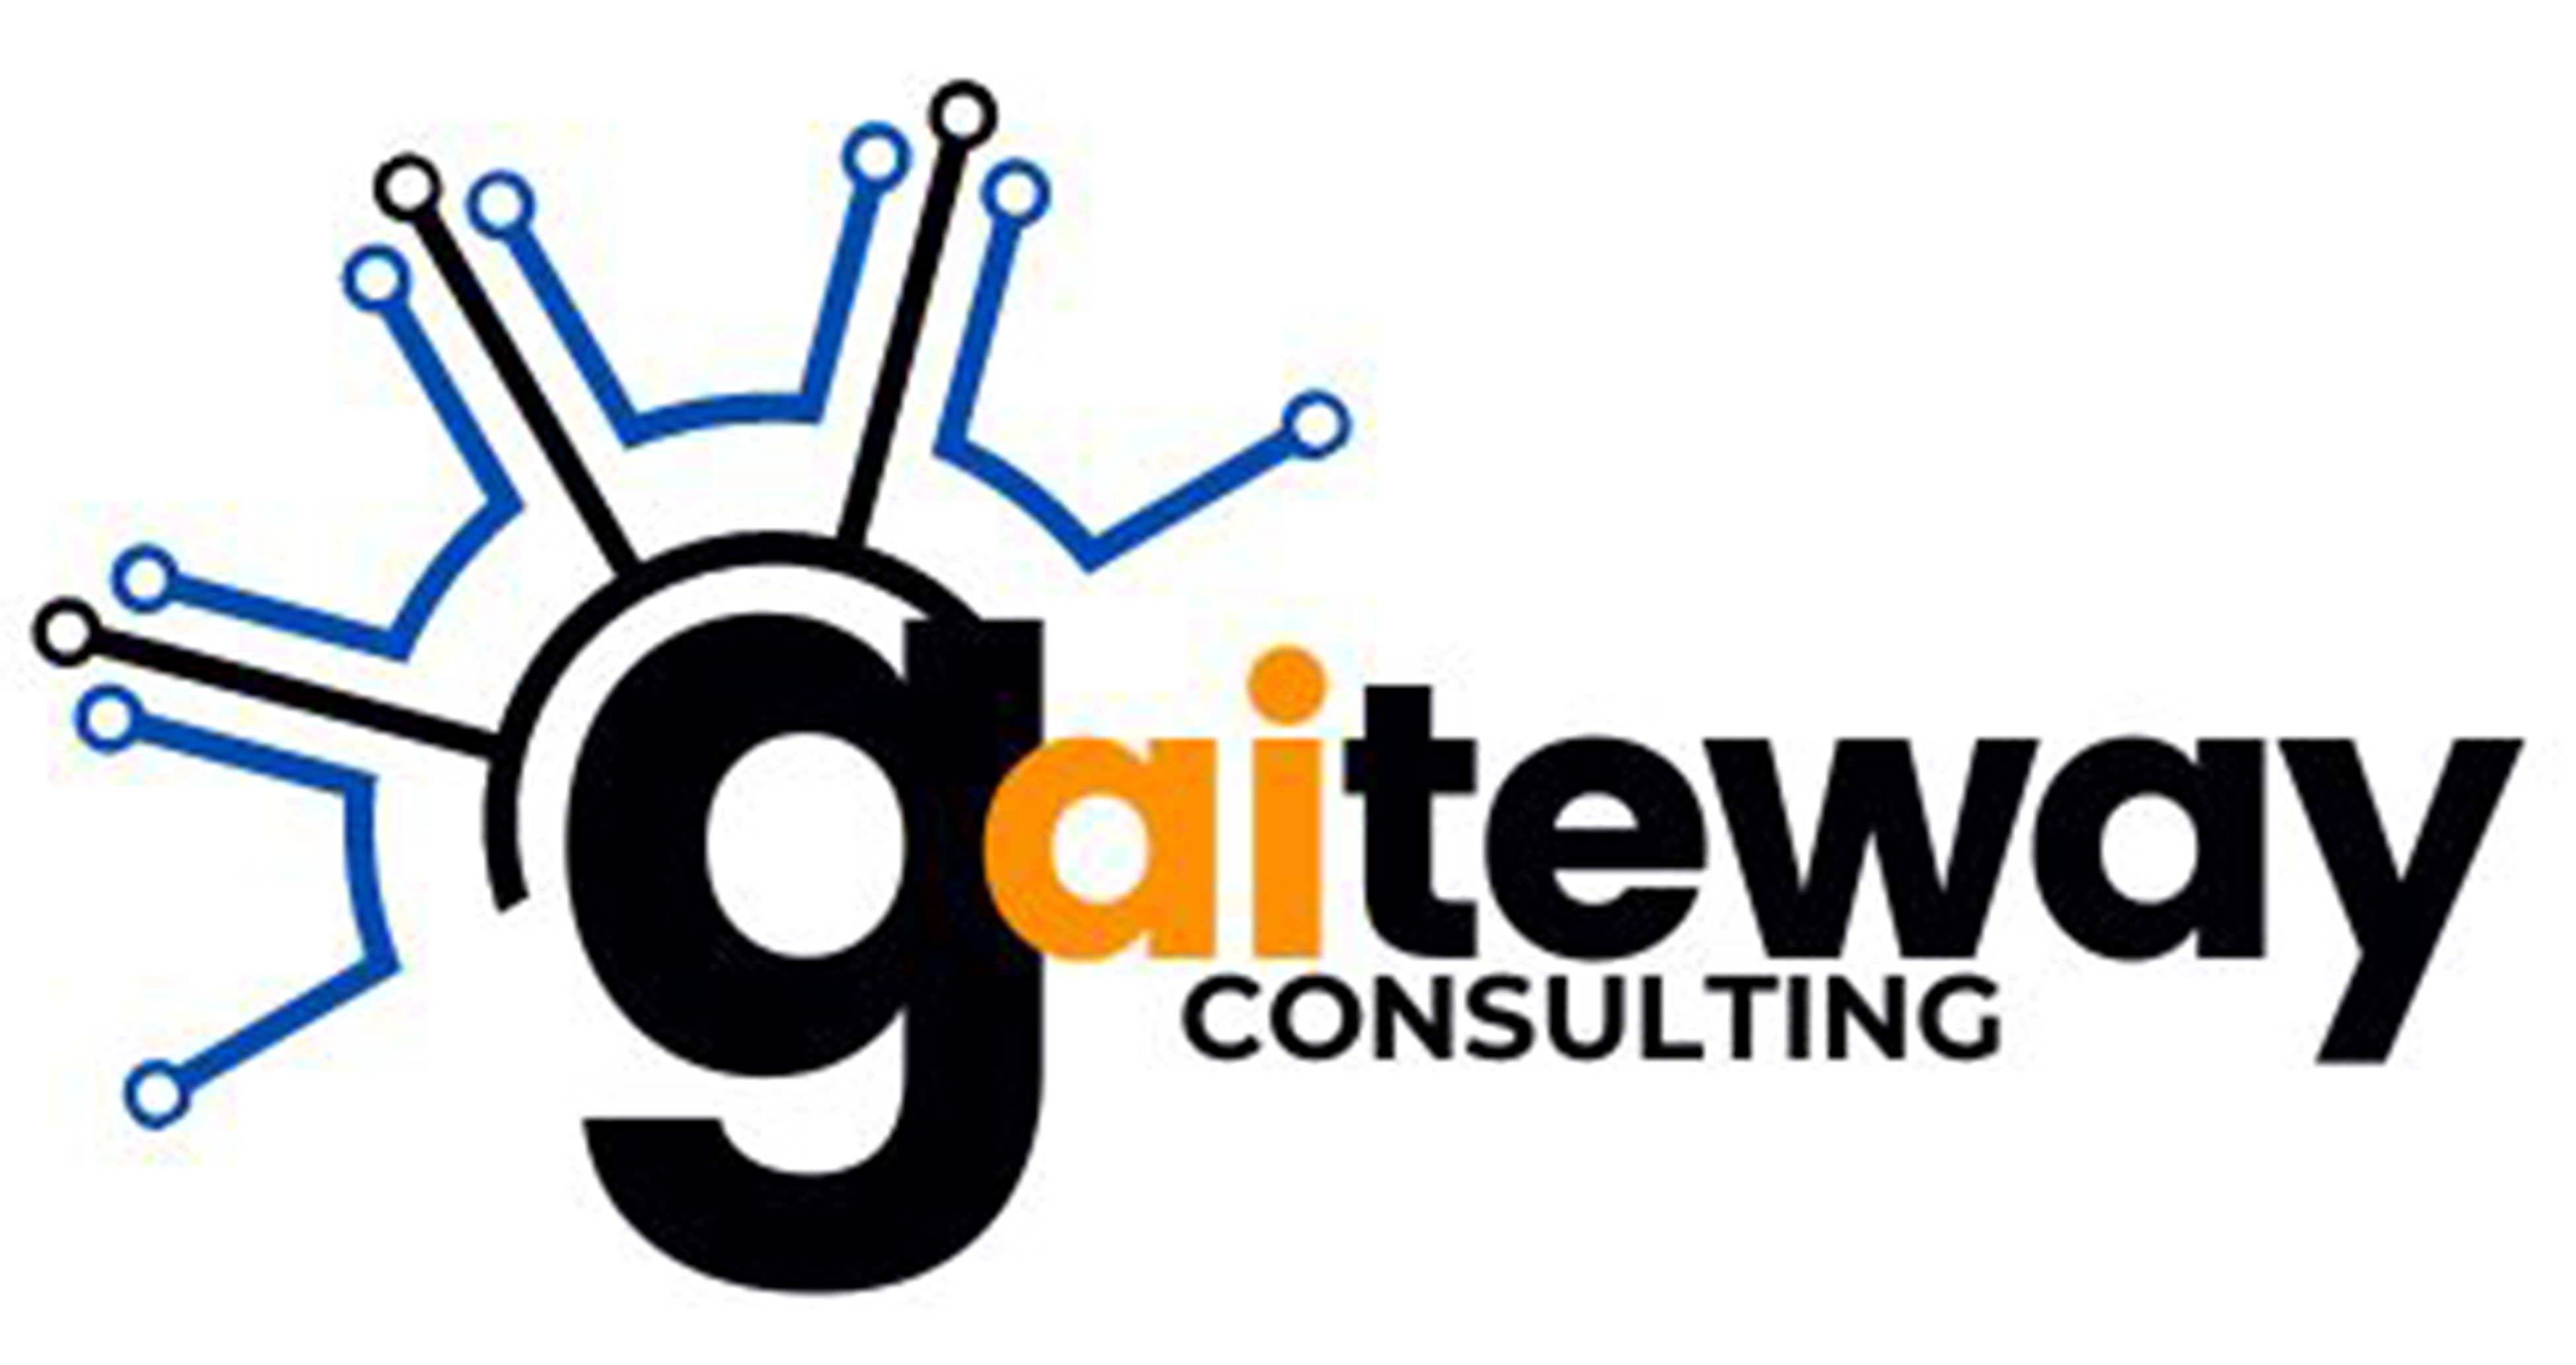 Gaiteway Consulting Logo